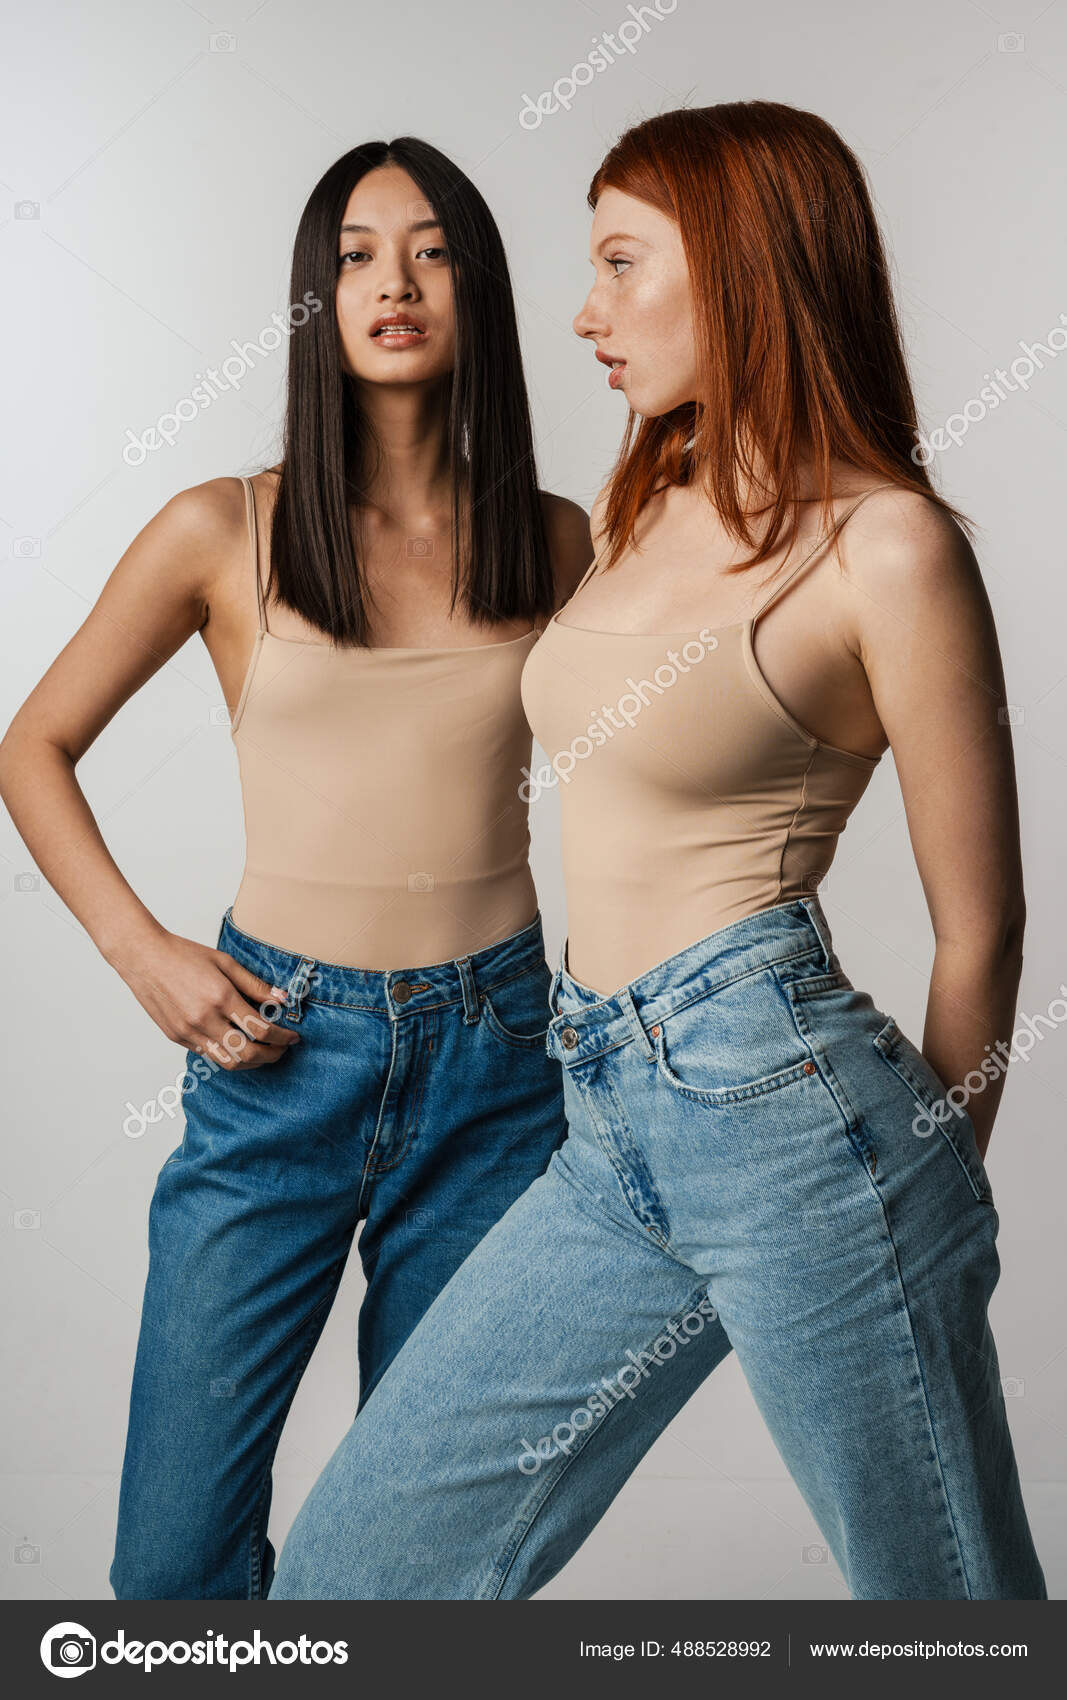 Two Cheerful Women Posing Night Dress Stock Photo 374270068 | Shutterstock